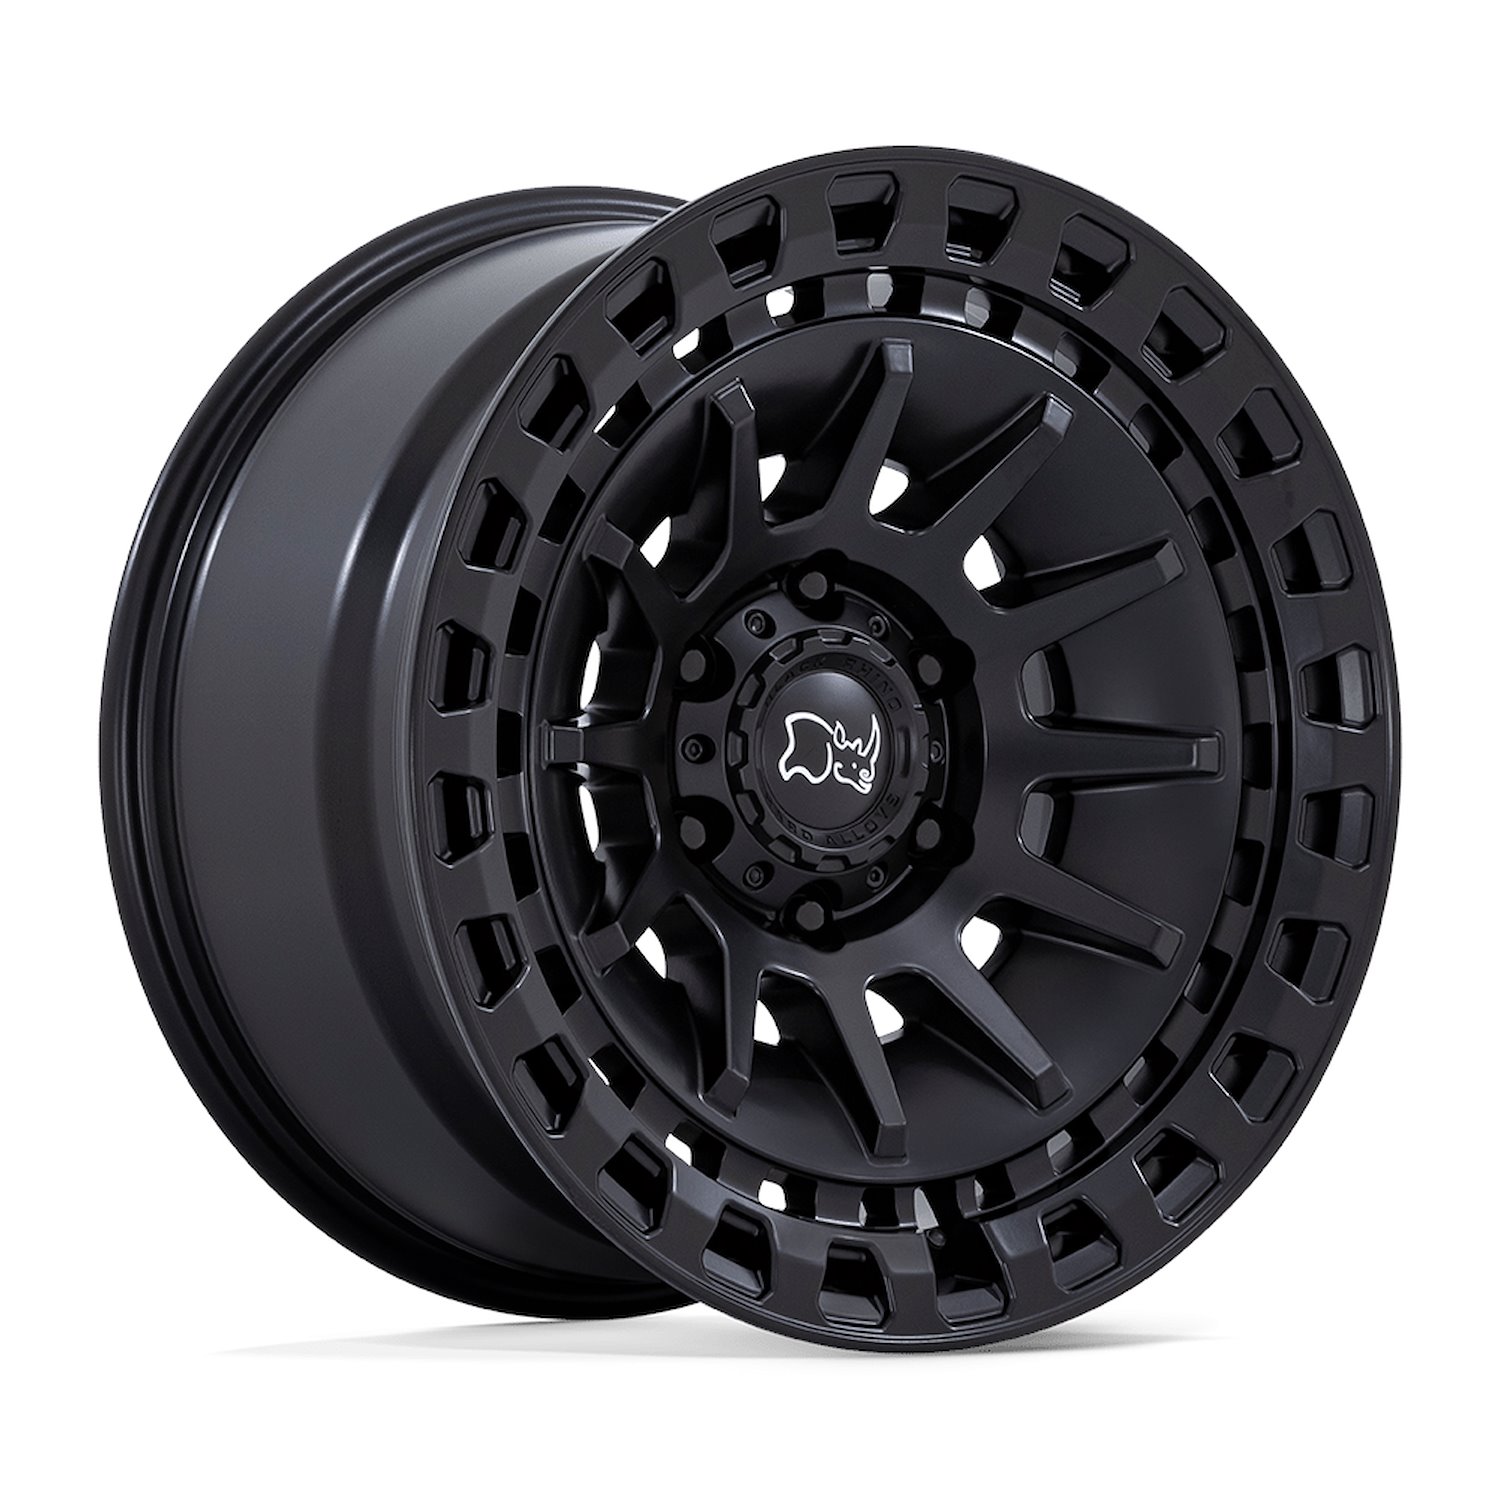 BR009MX18905000 BARRAGE Wheel [Size: 18" x 9"] Matte Black